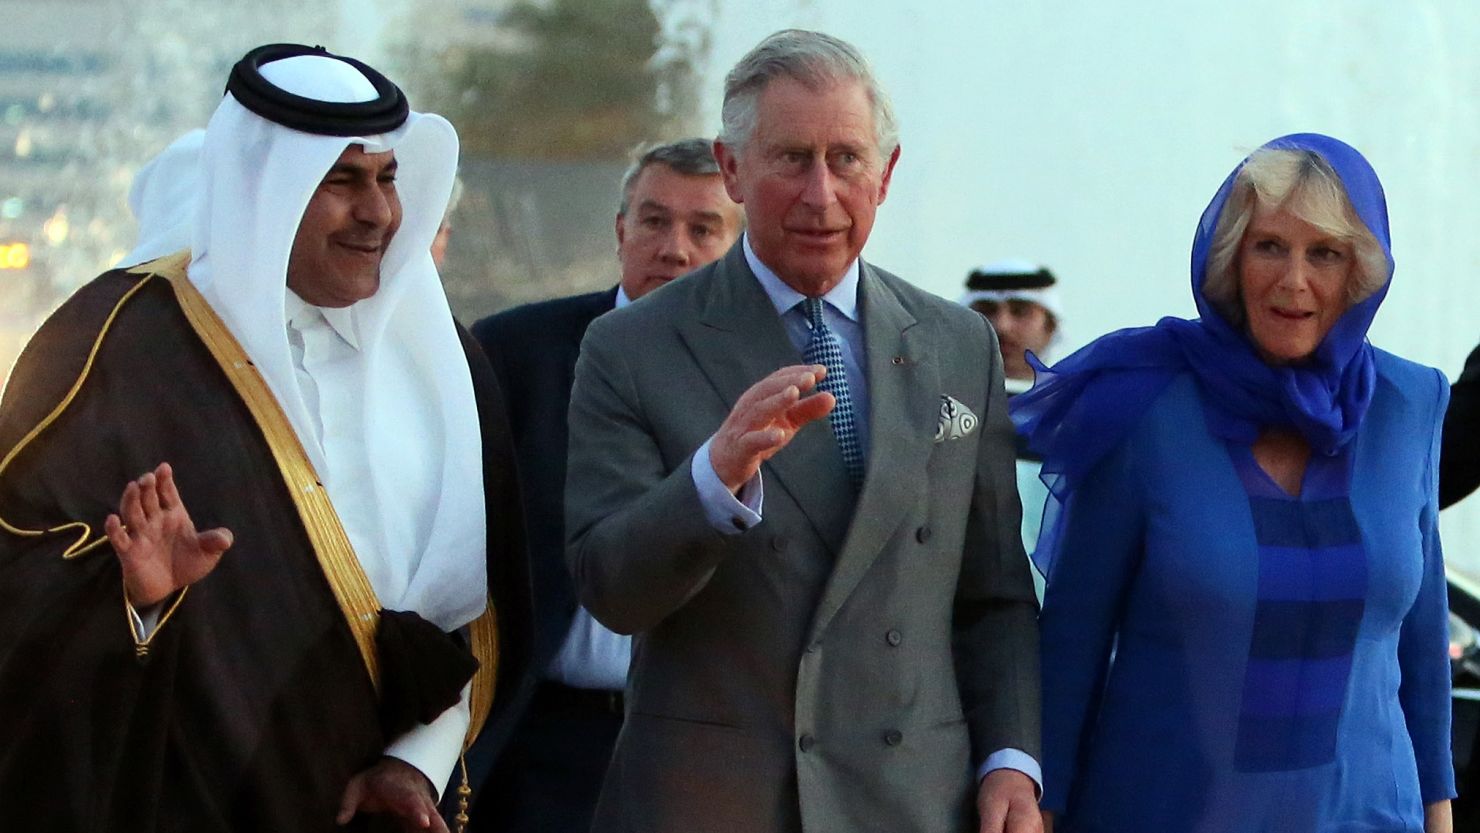 Qatar's Sheikh Abdul Rahman Bin Saud Al Thani escorts Prince Charles and his wife Camilla in Doha on Wednesday.